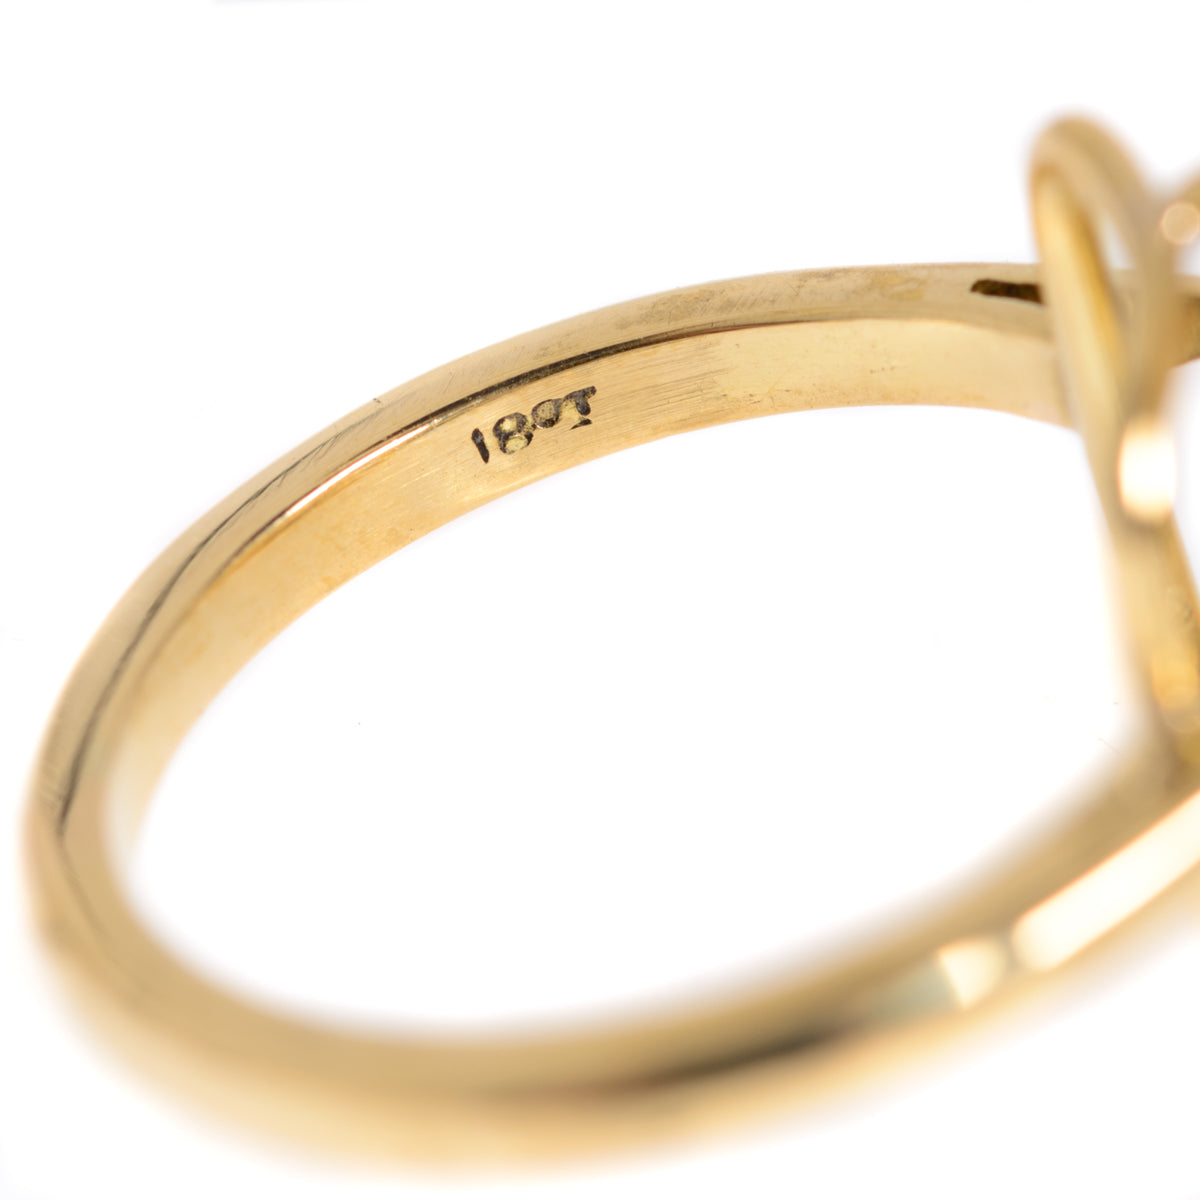 Antique 18ct Gold Split Pearl & Enamel Ladies Mourning Ring c.1900 (A1248)